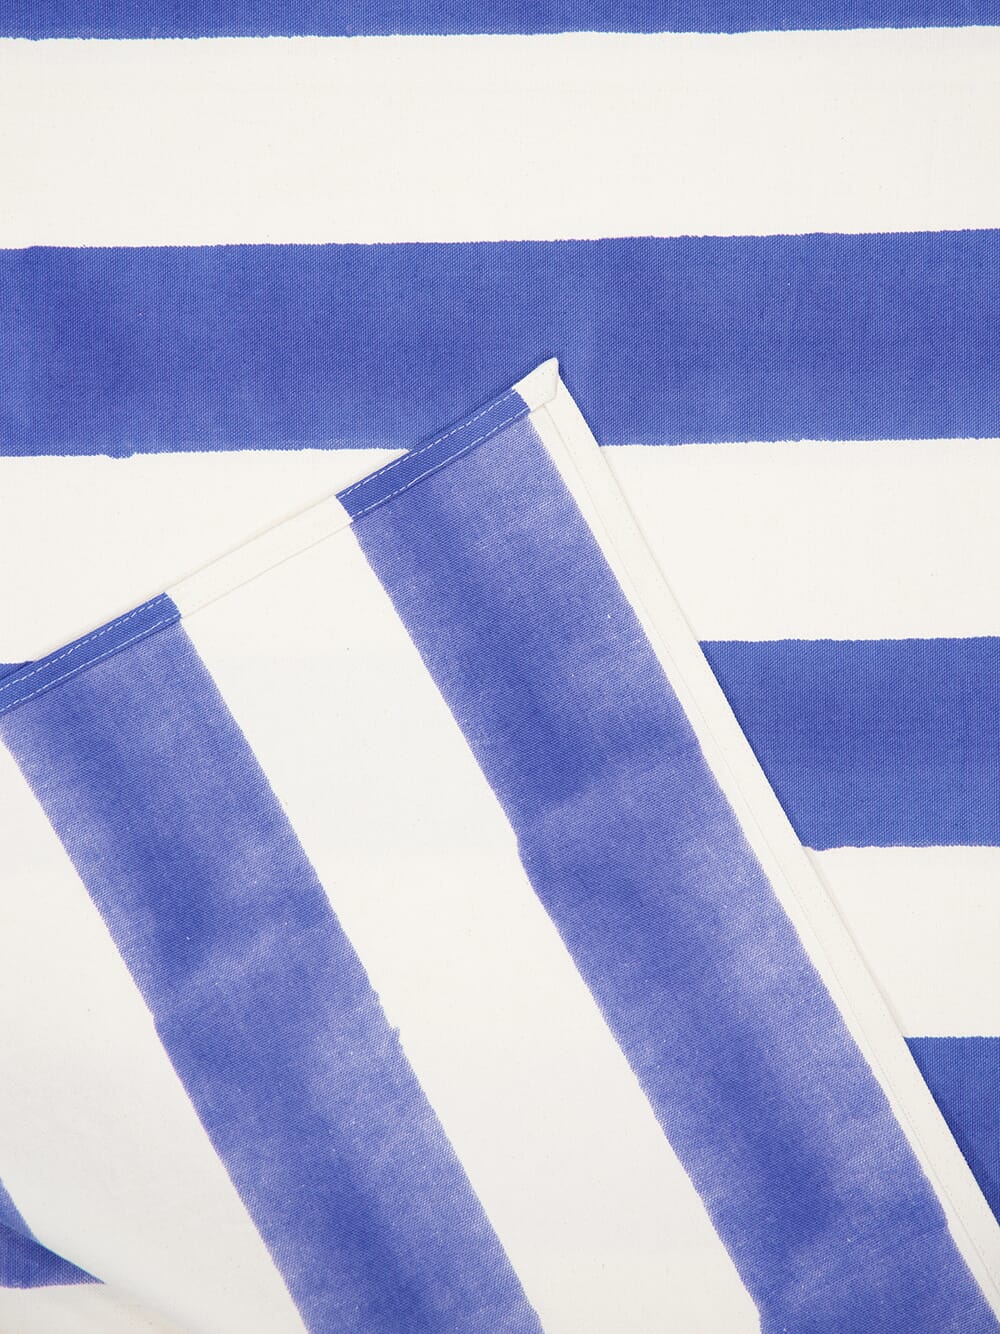 Striped Block Print Blue Tablecloth